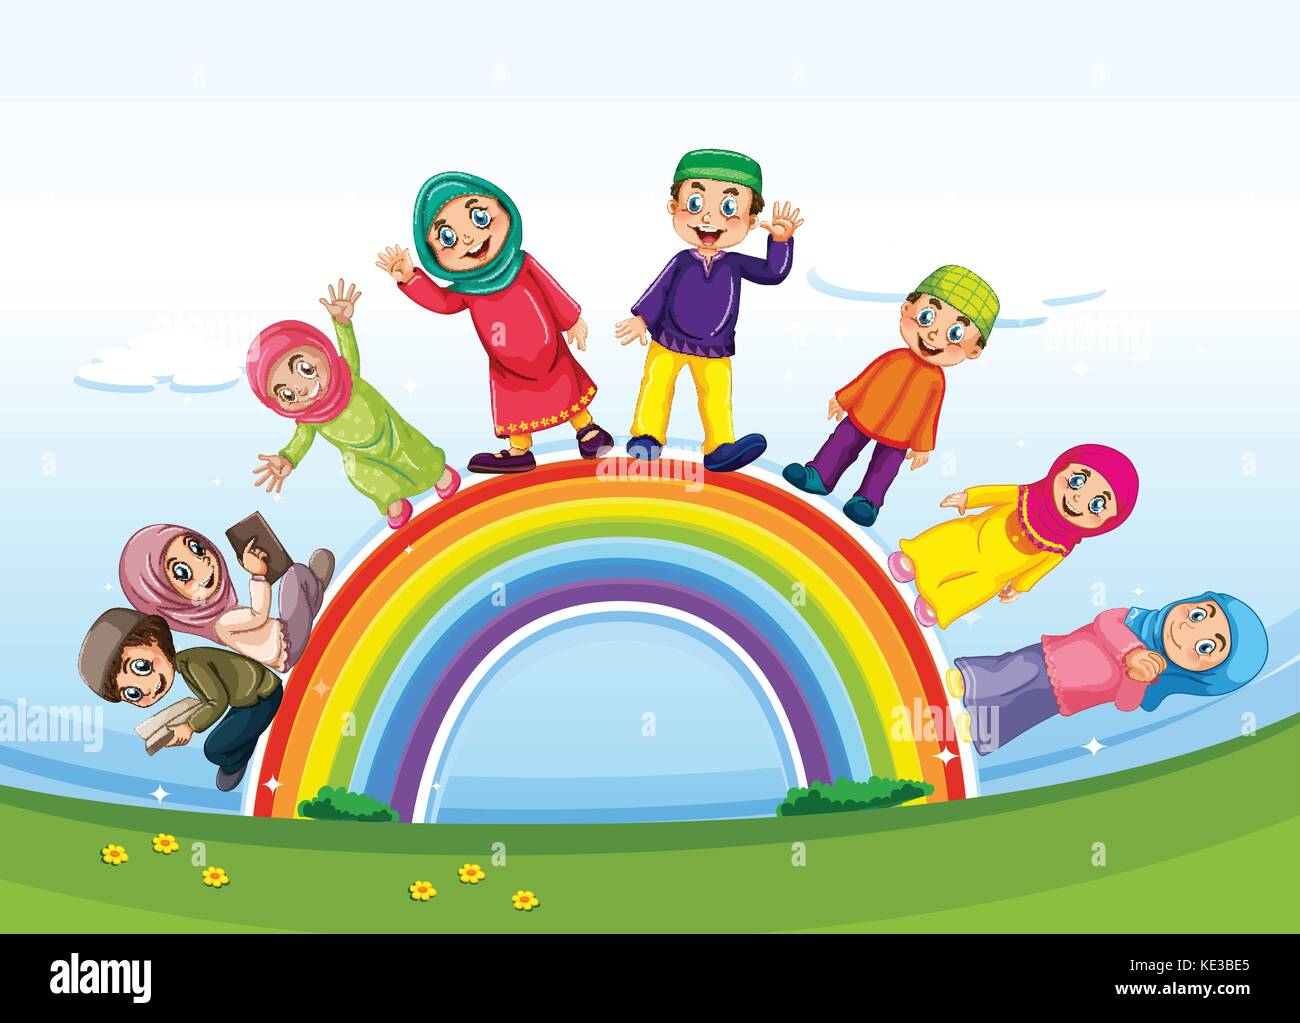 Muslim family standing on rainbow illustration Stock Vector